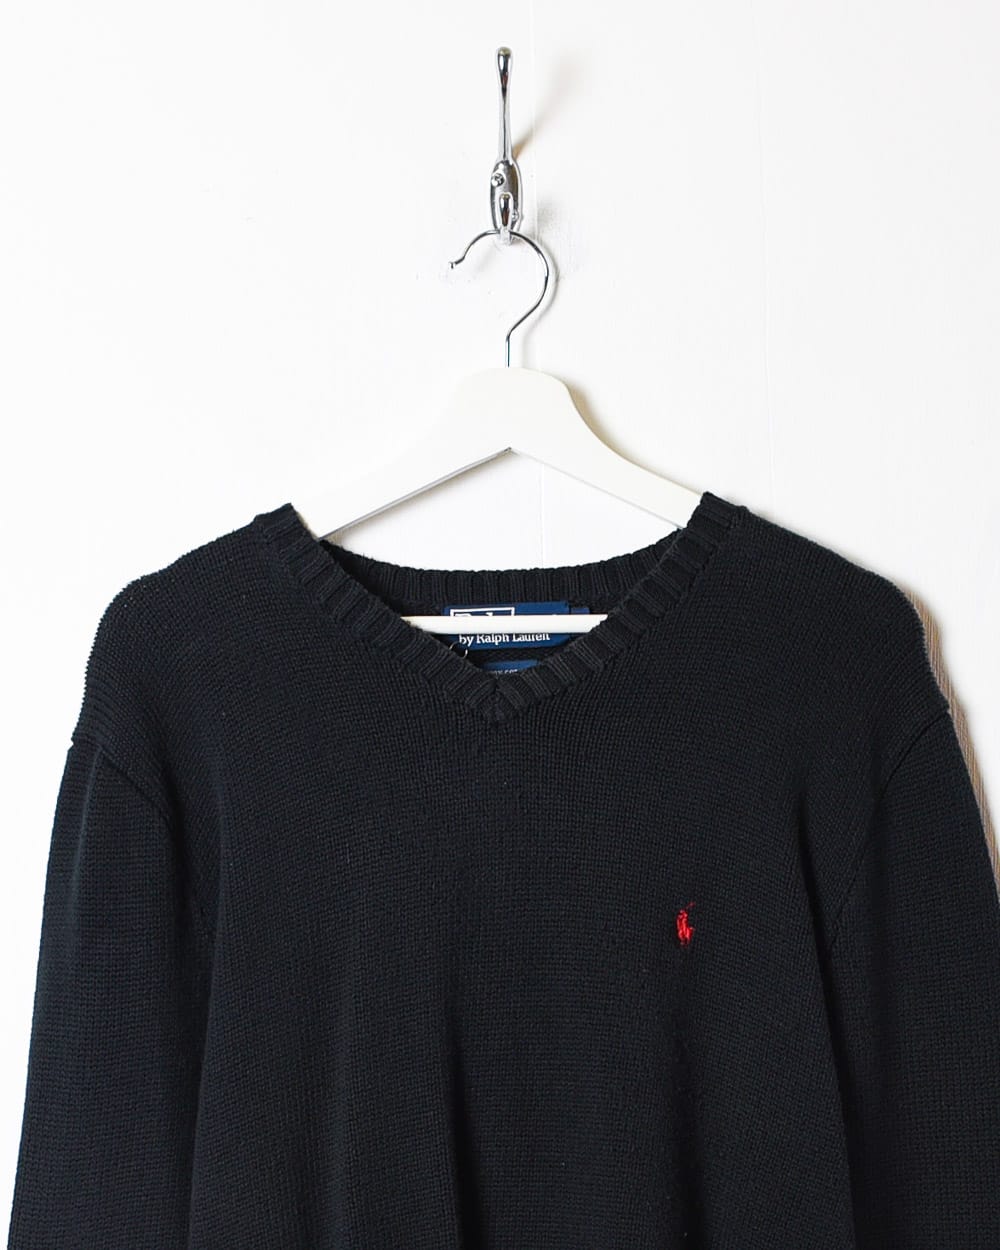 Black Ralph Lauren Knitted Sweatshirt - Small